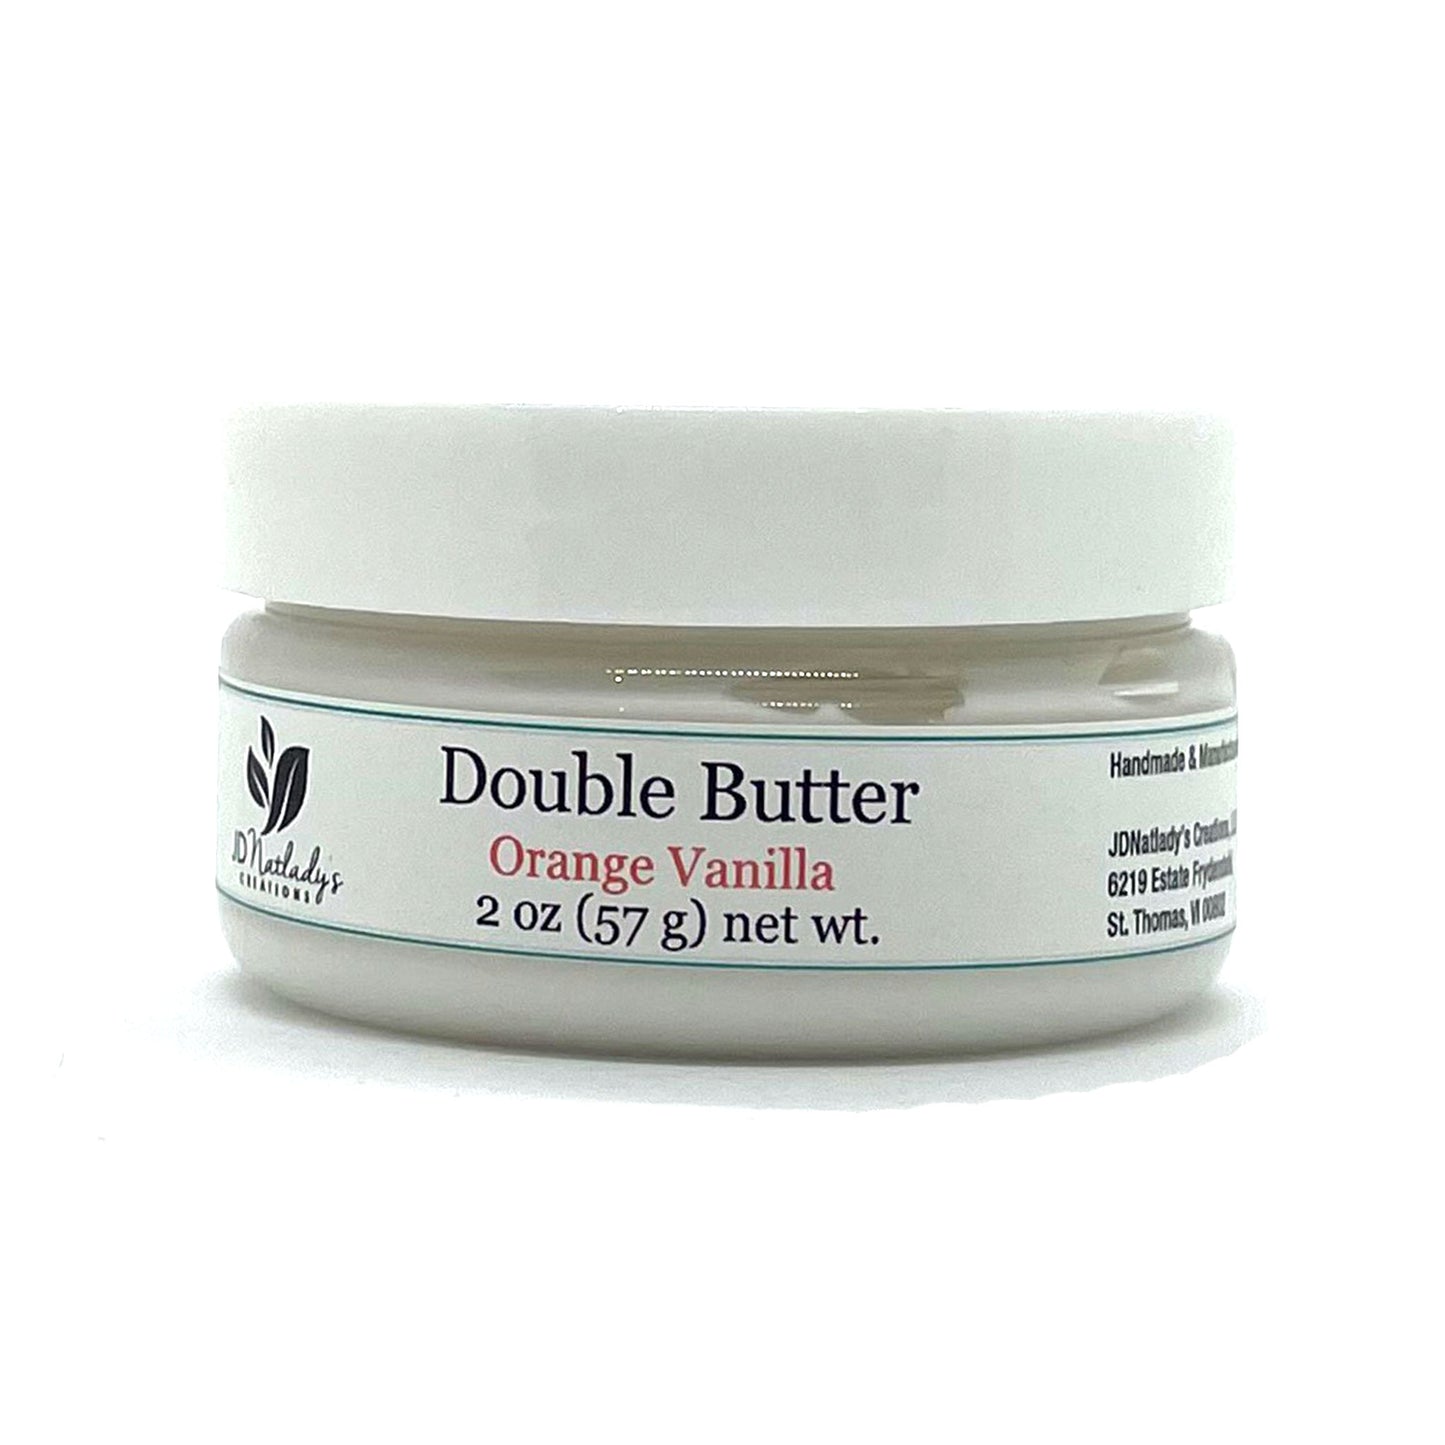 body moisturizing shea butter by JDNatlady's Creations